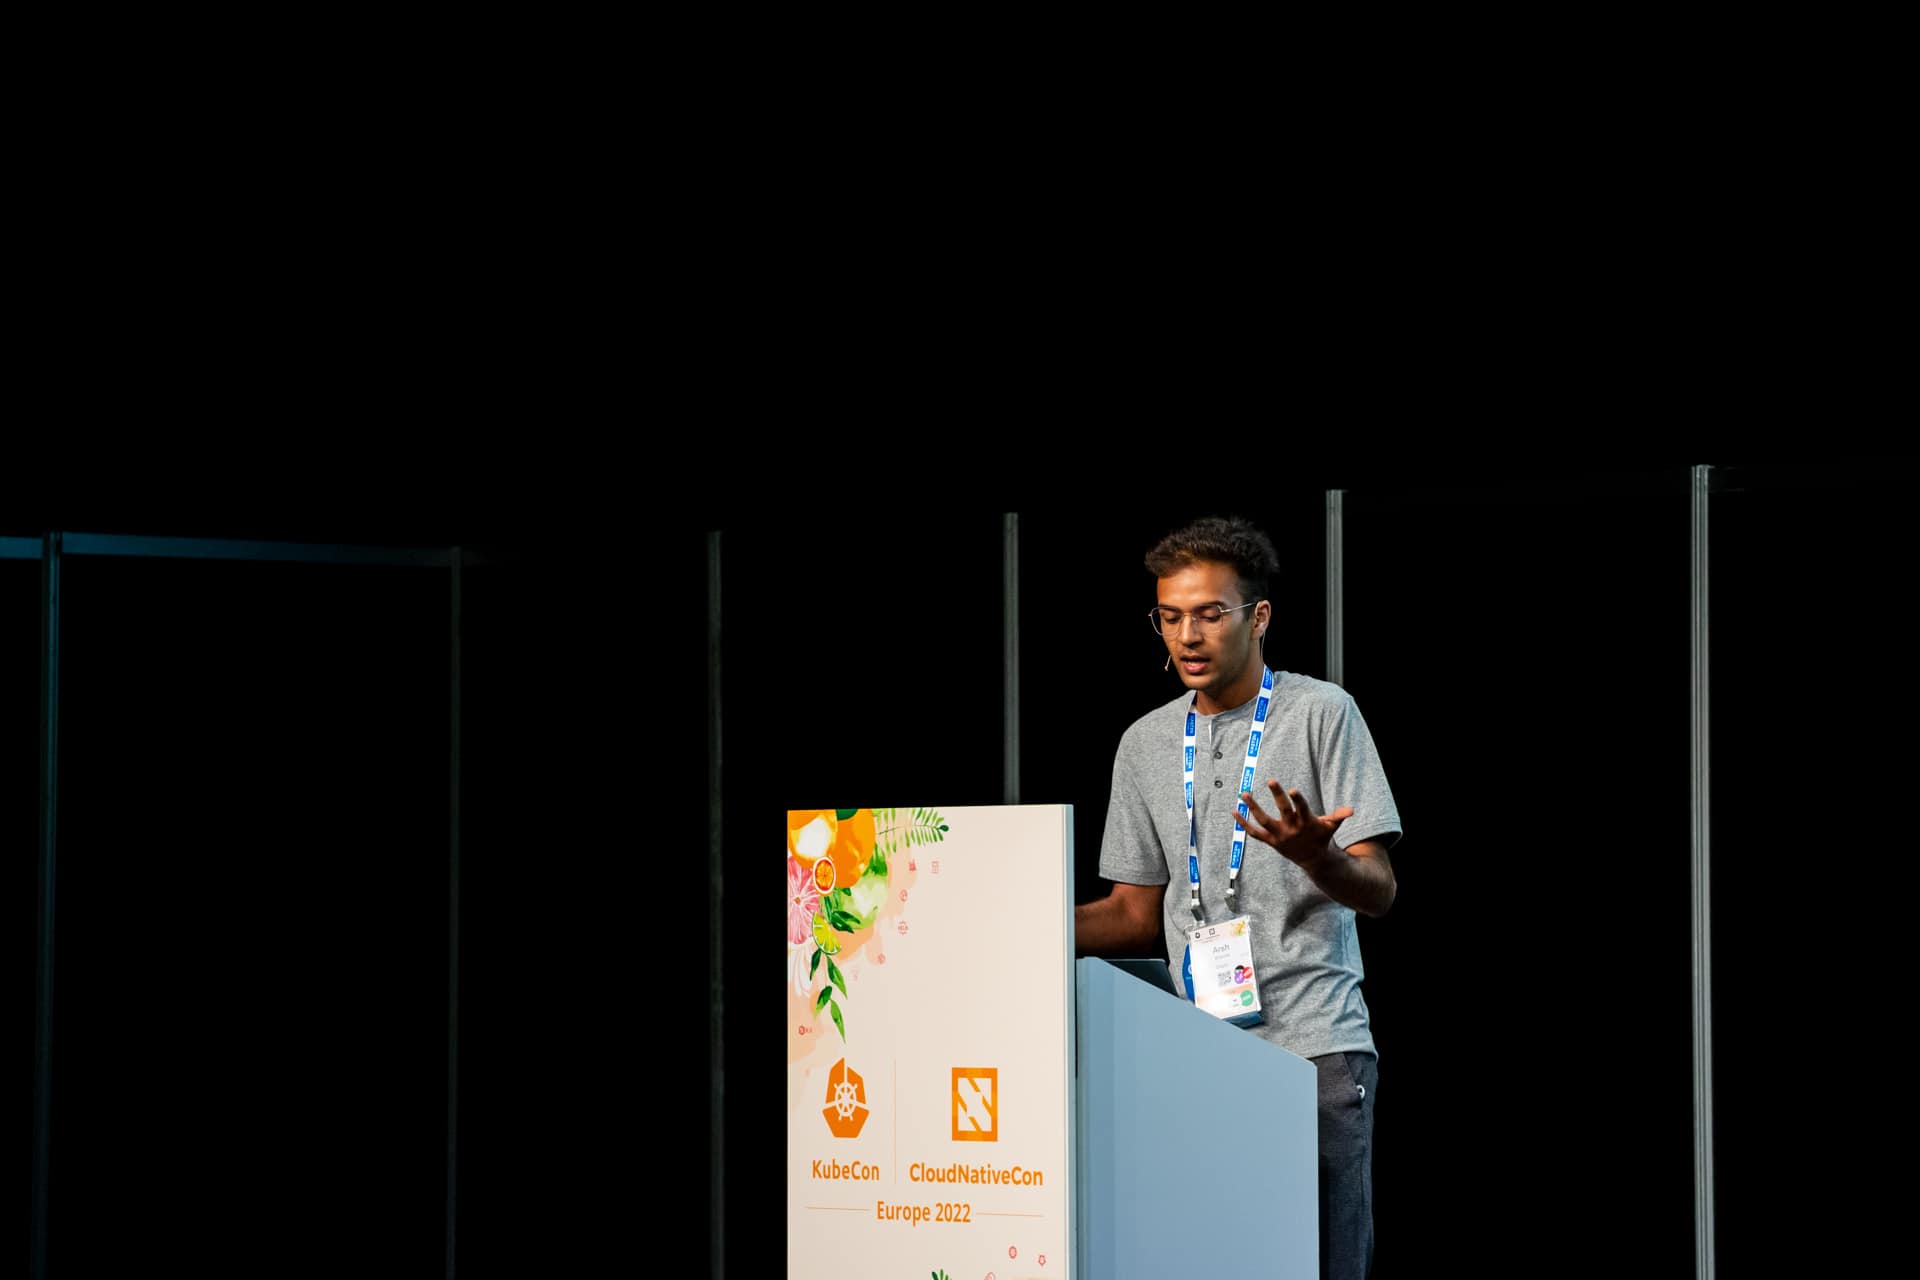 Ash Sharma's first talk on KubeCon + CloudNativeCon Europe 2022